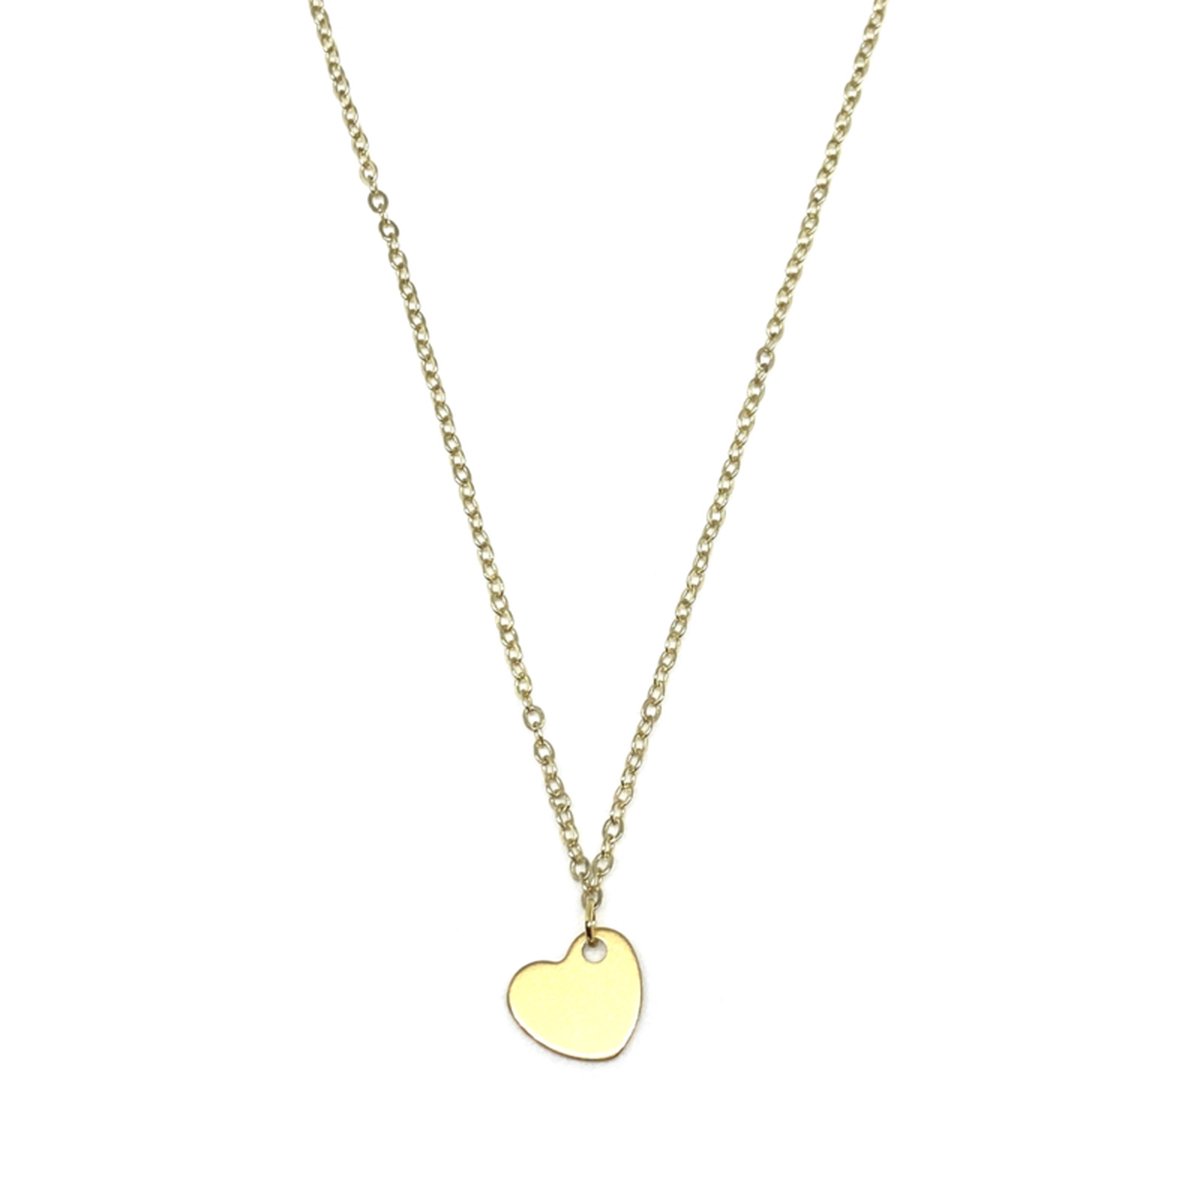 Little heart necklace - gold